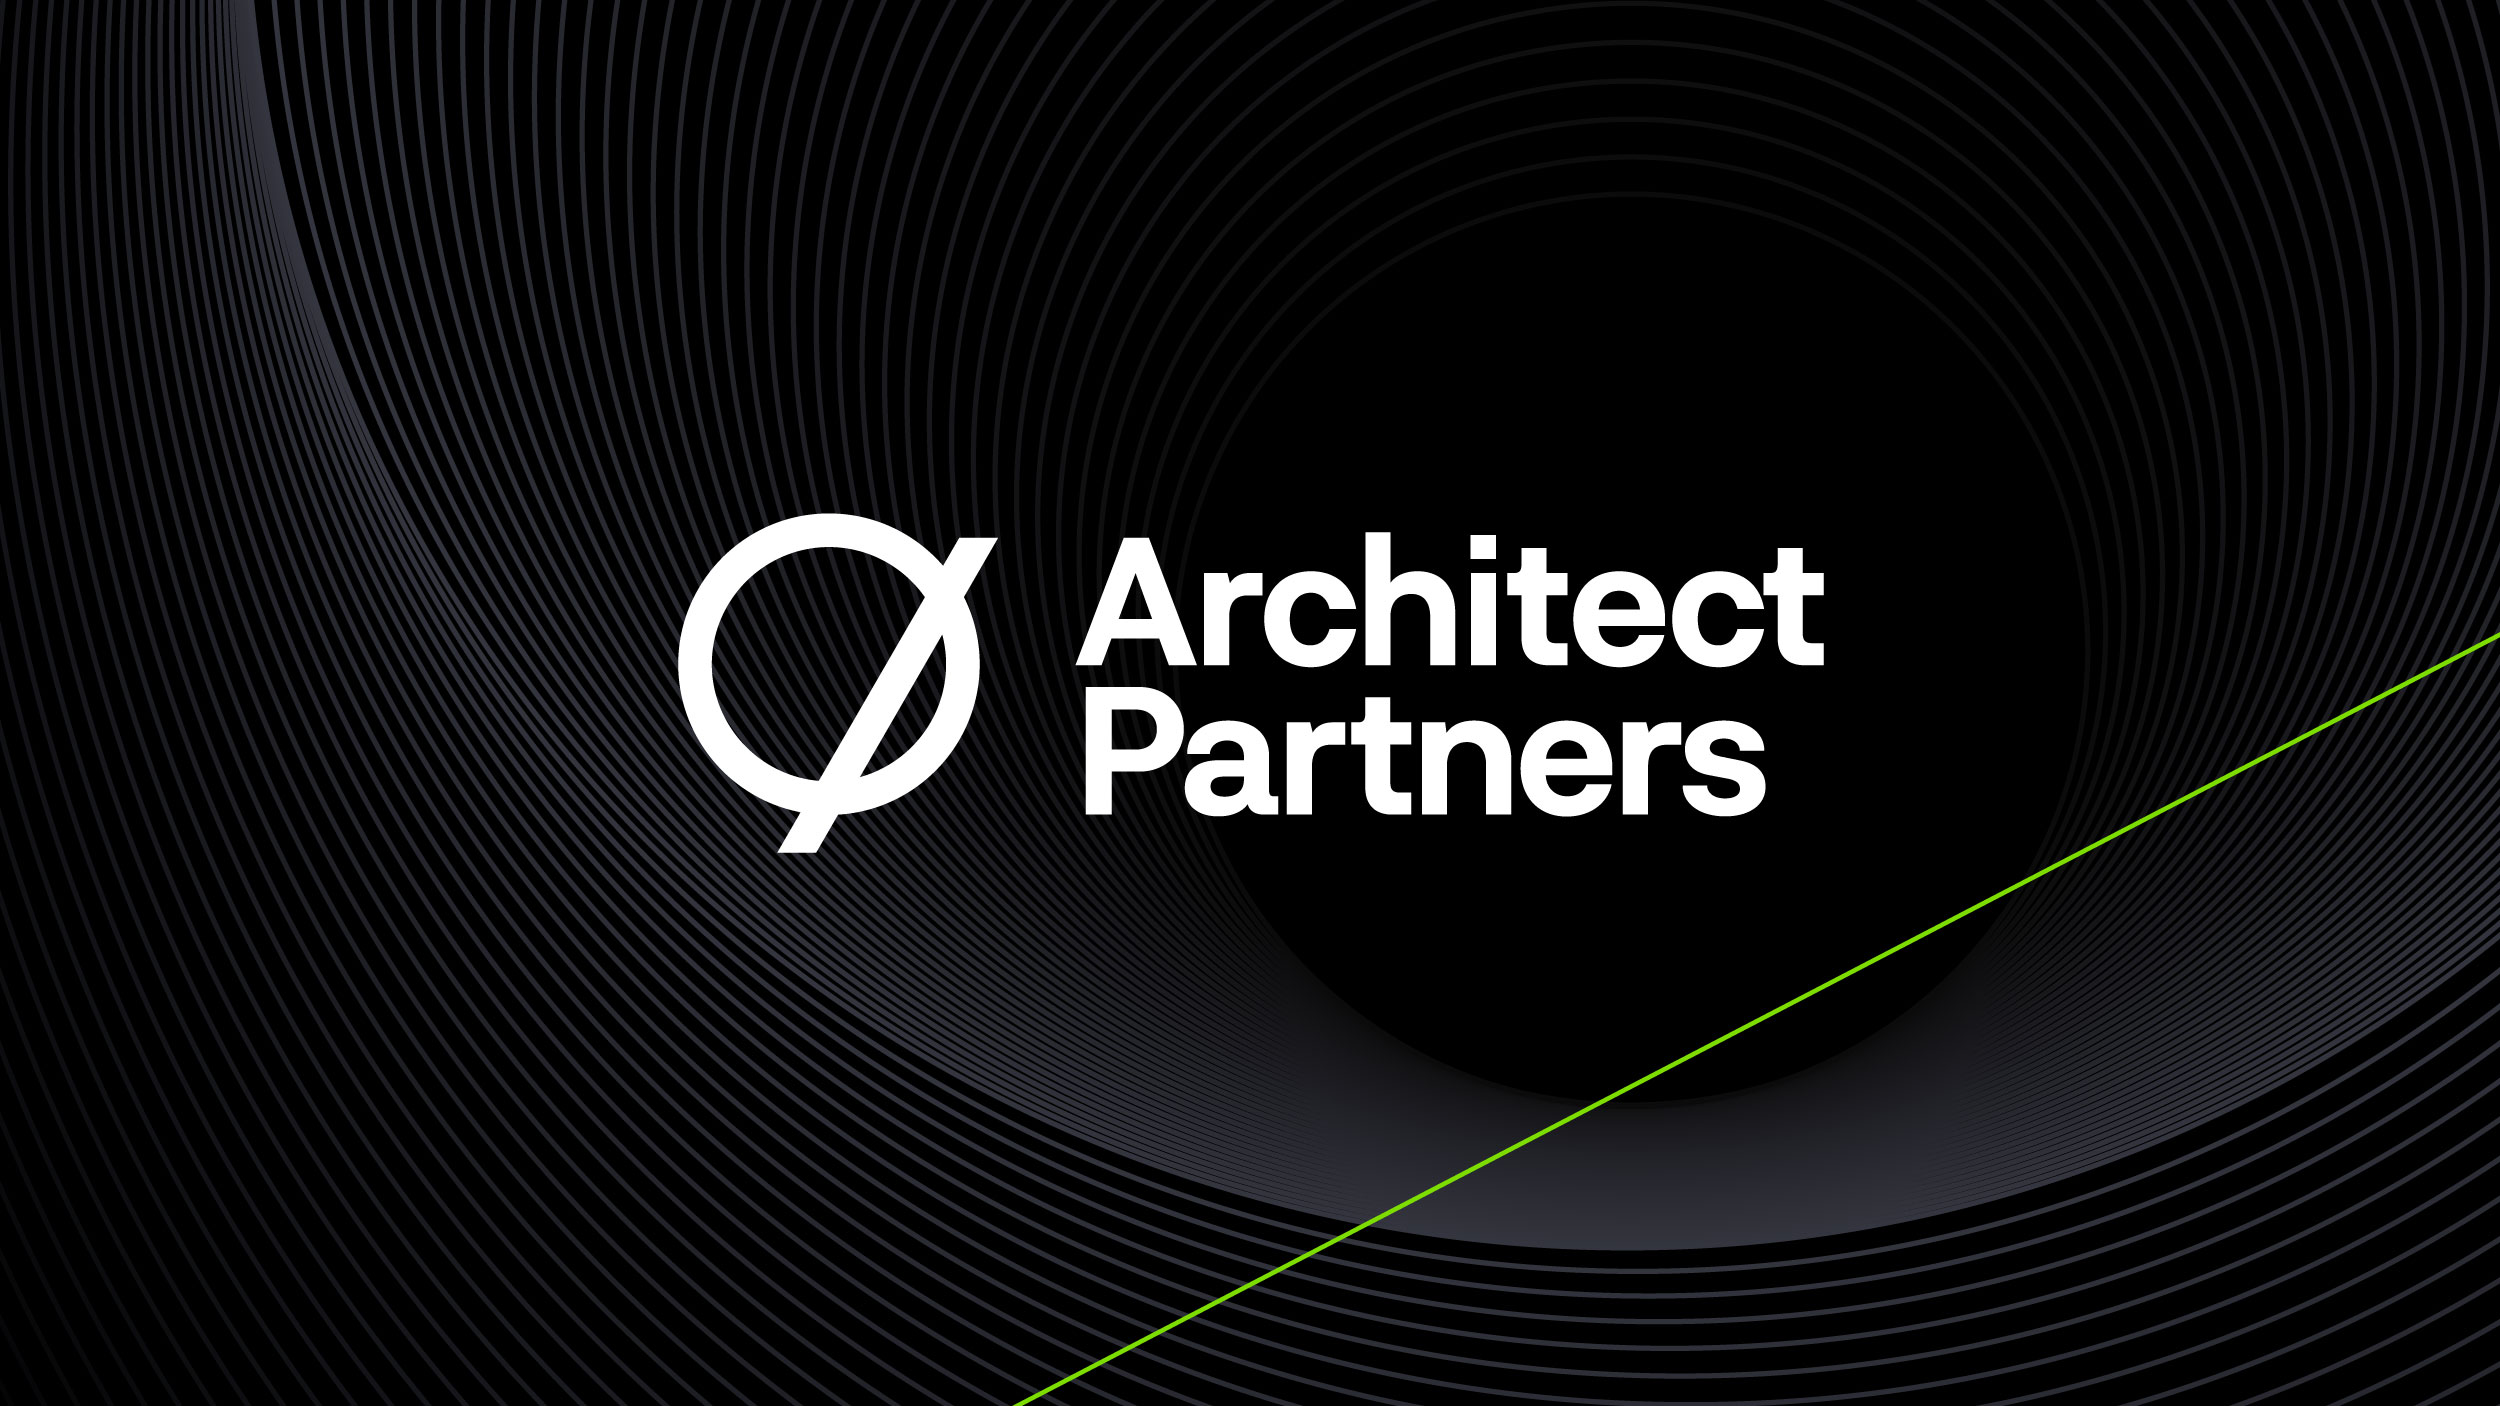 Architect Partners